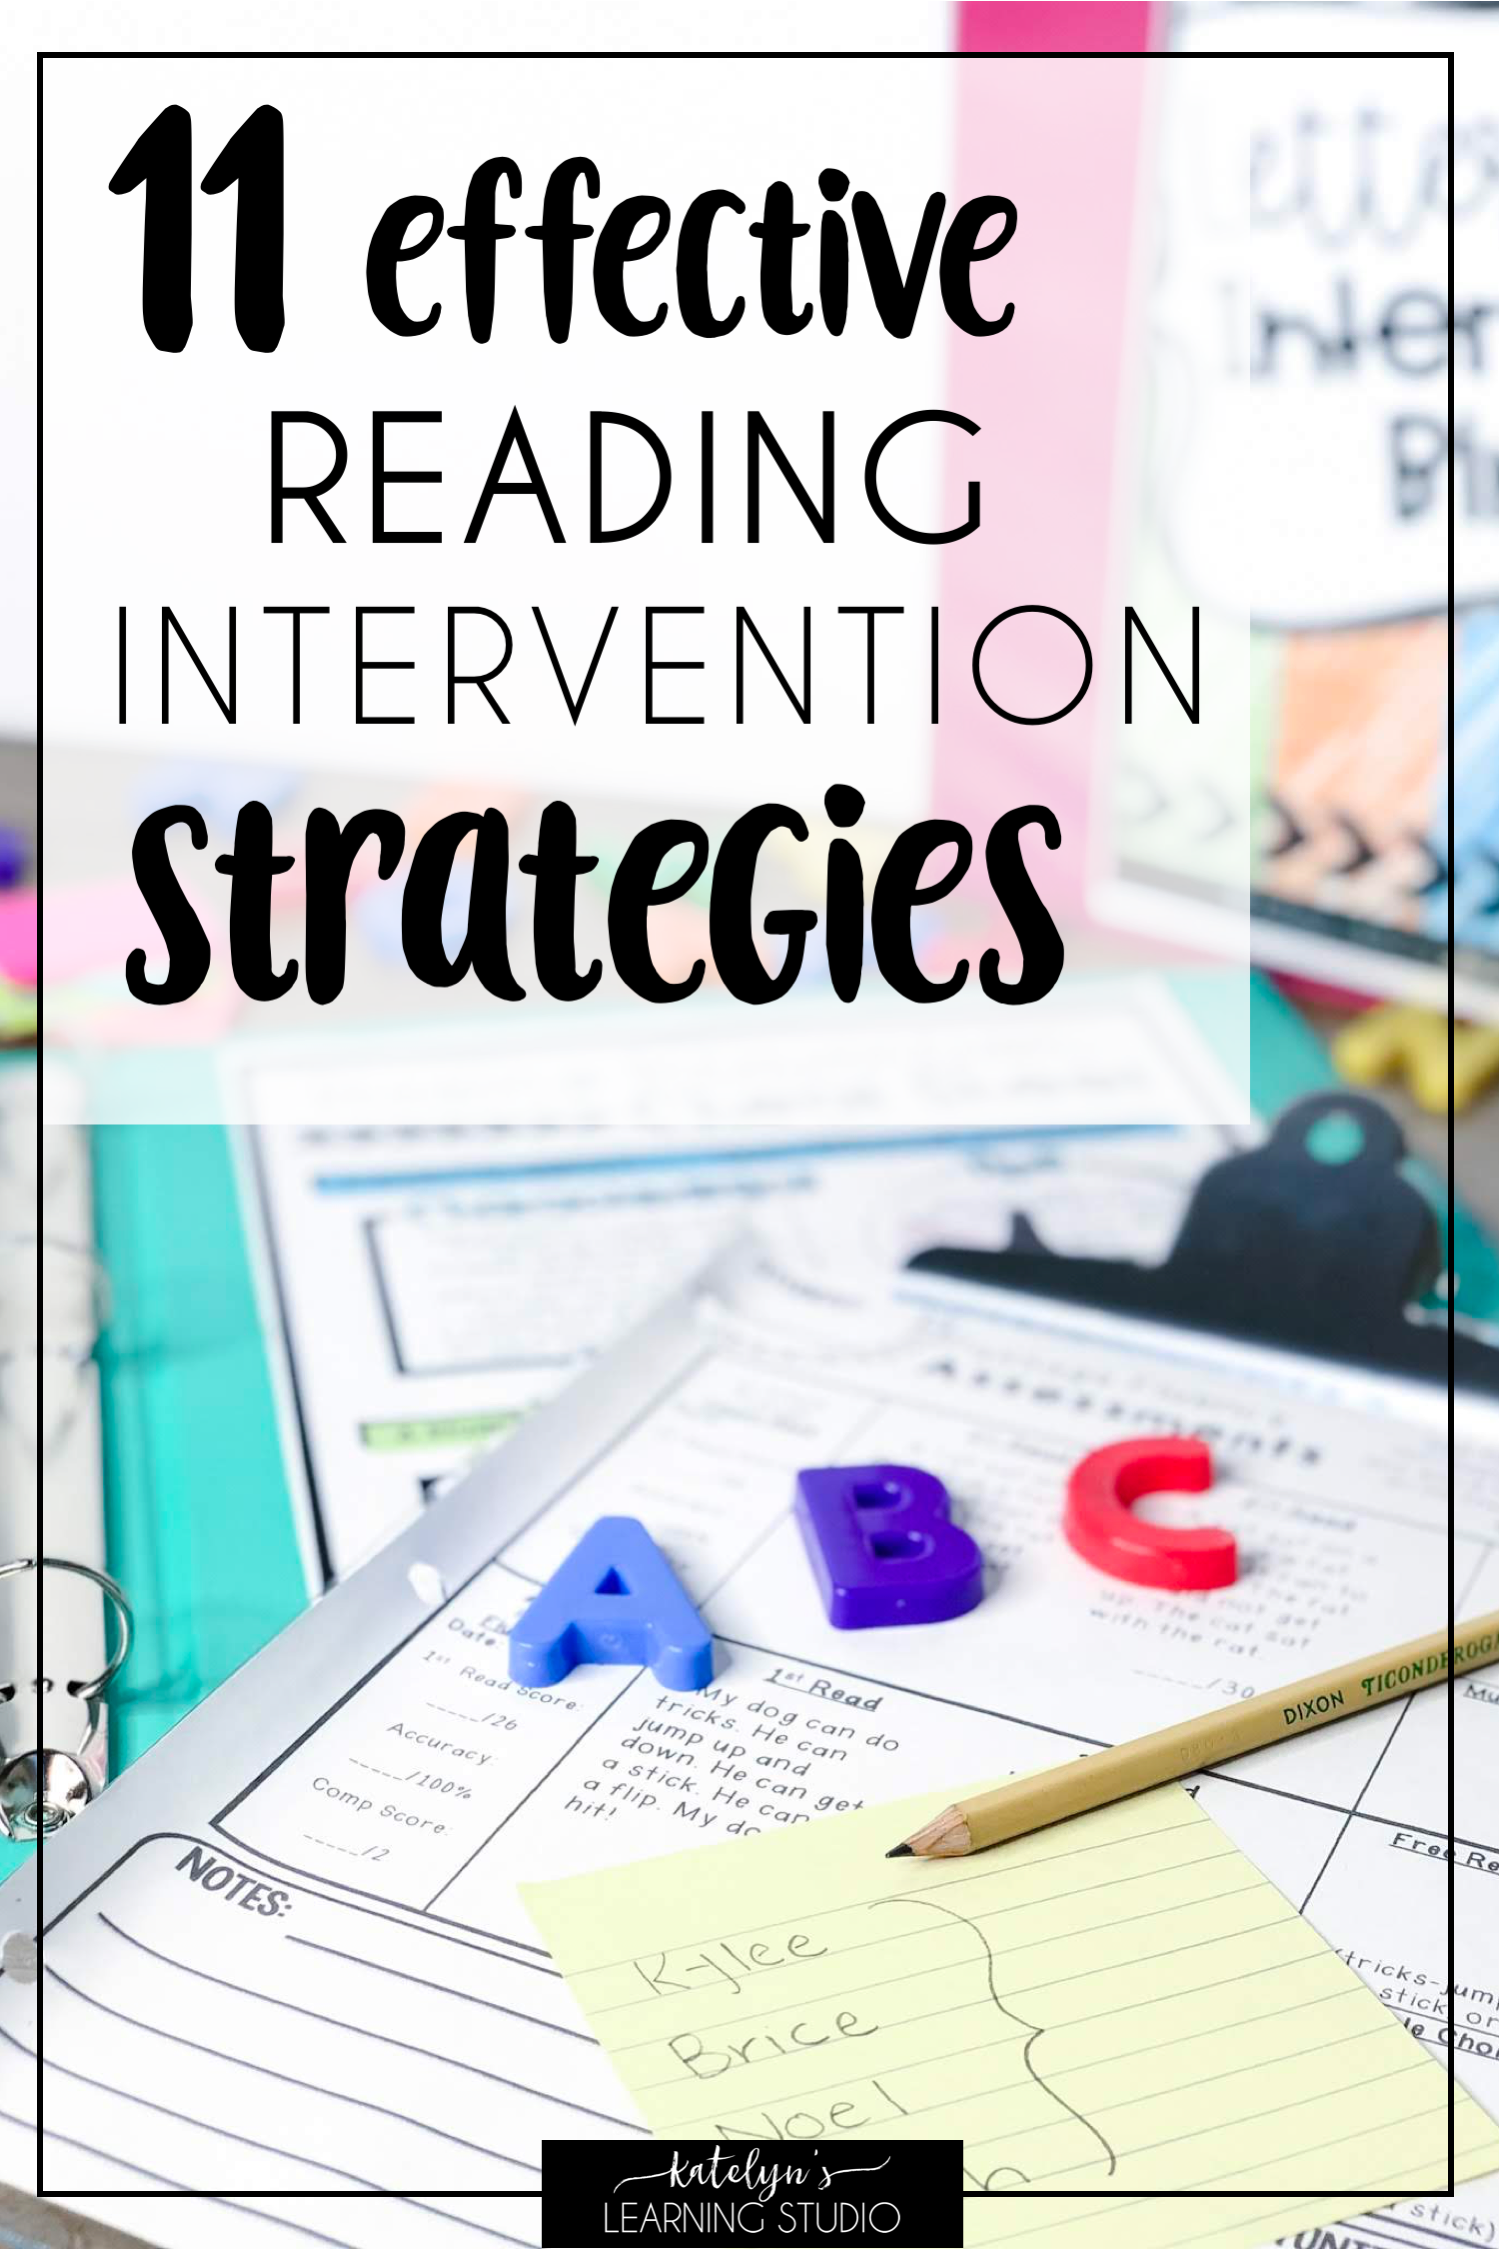 literature review intervention programs